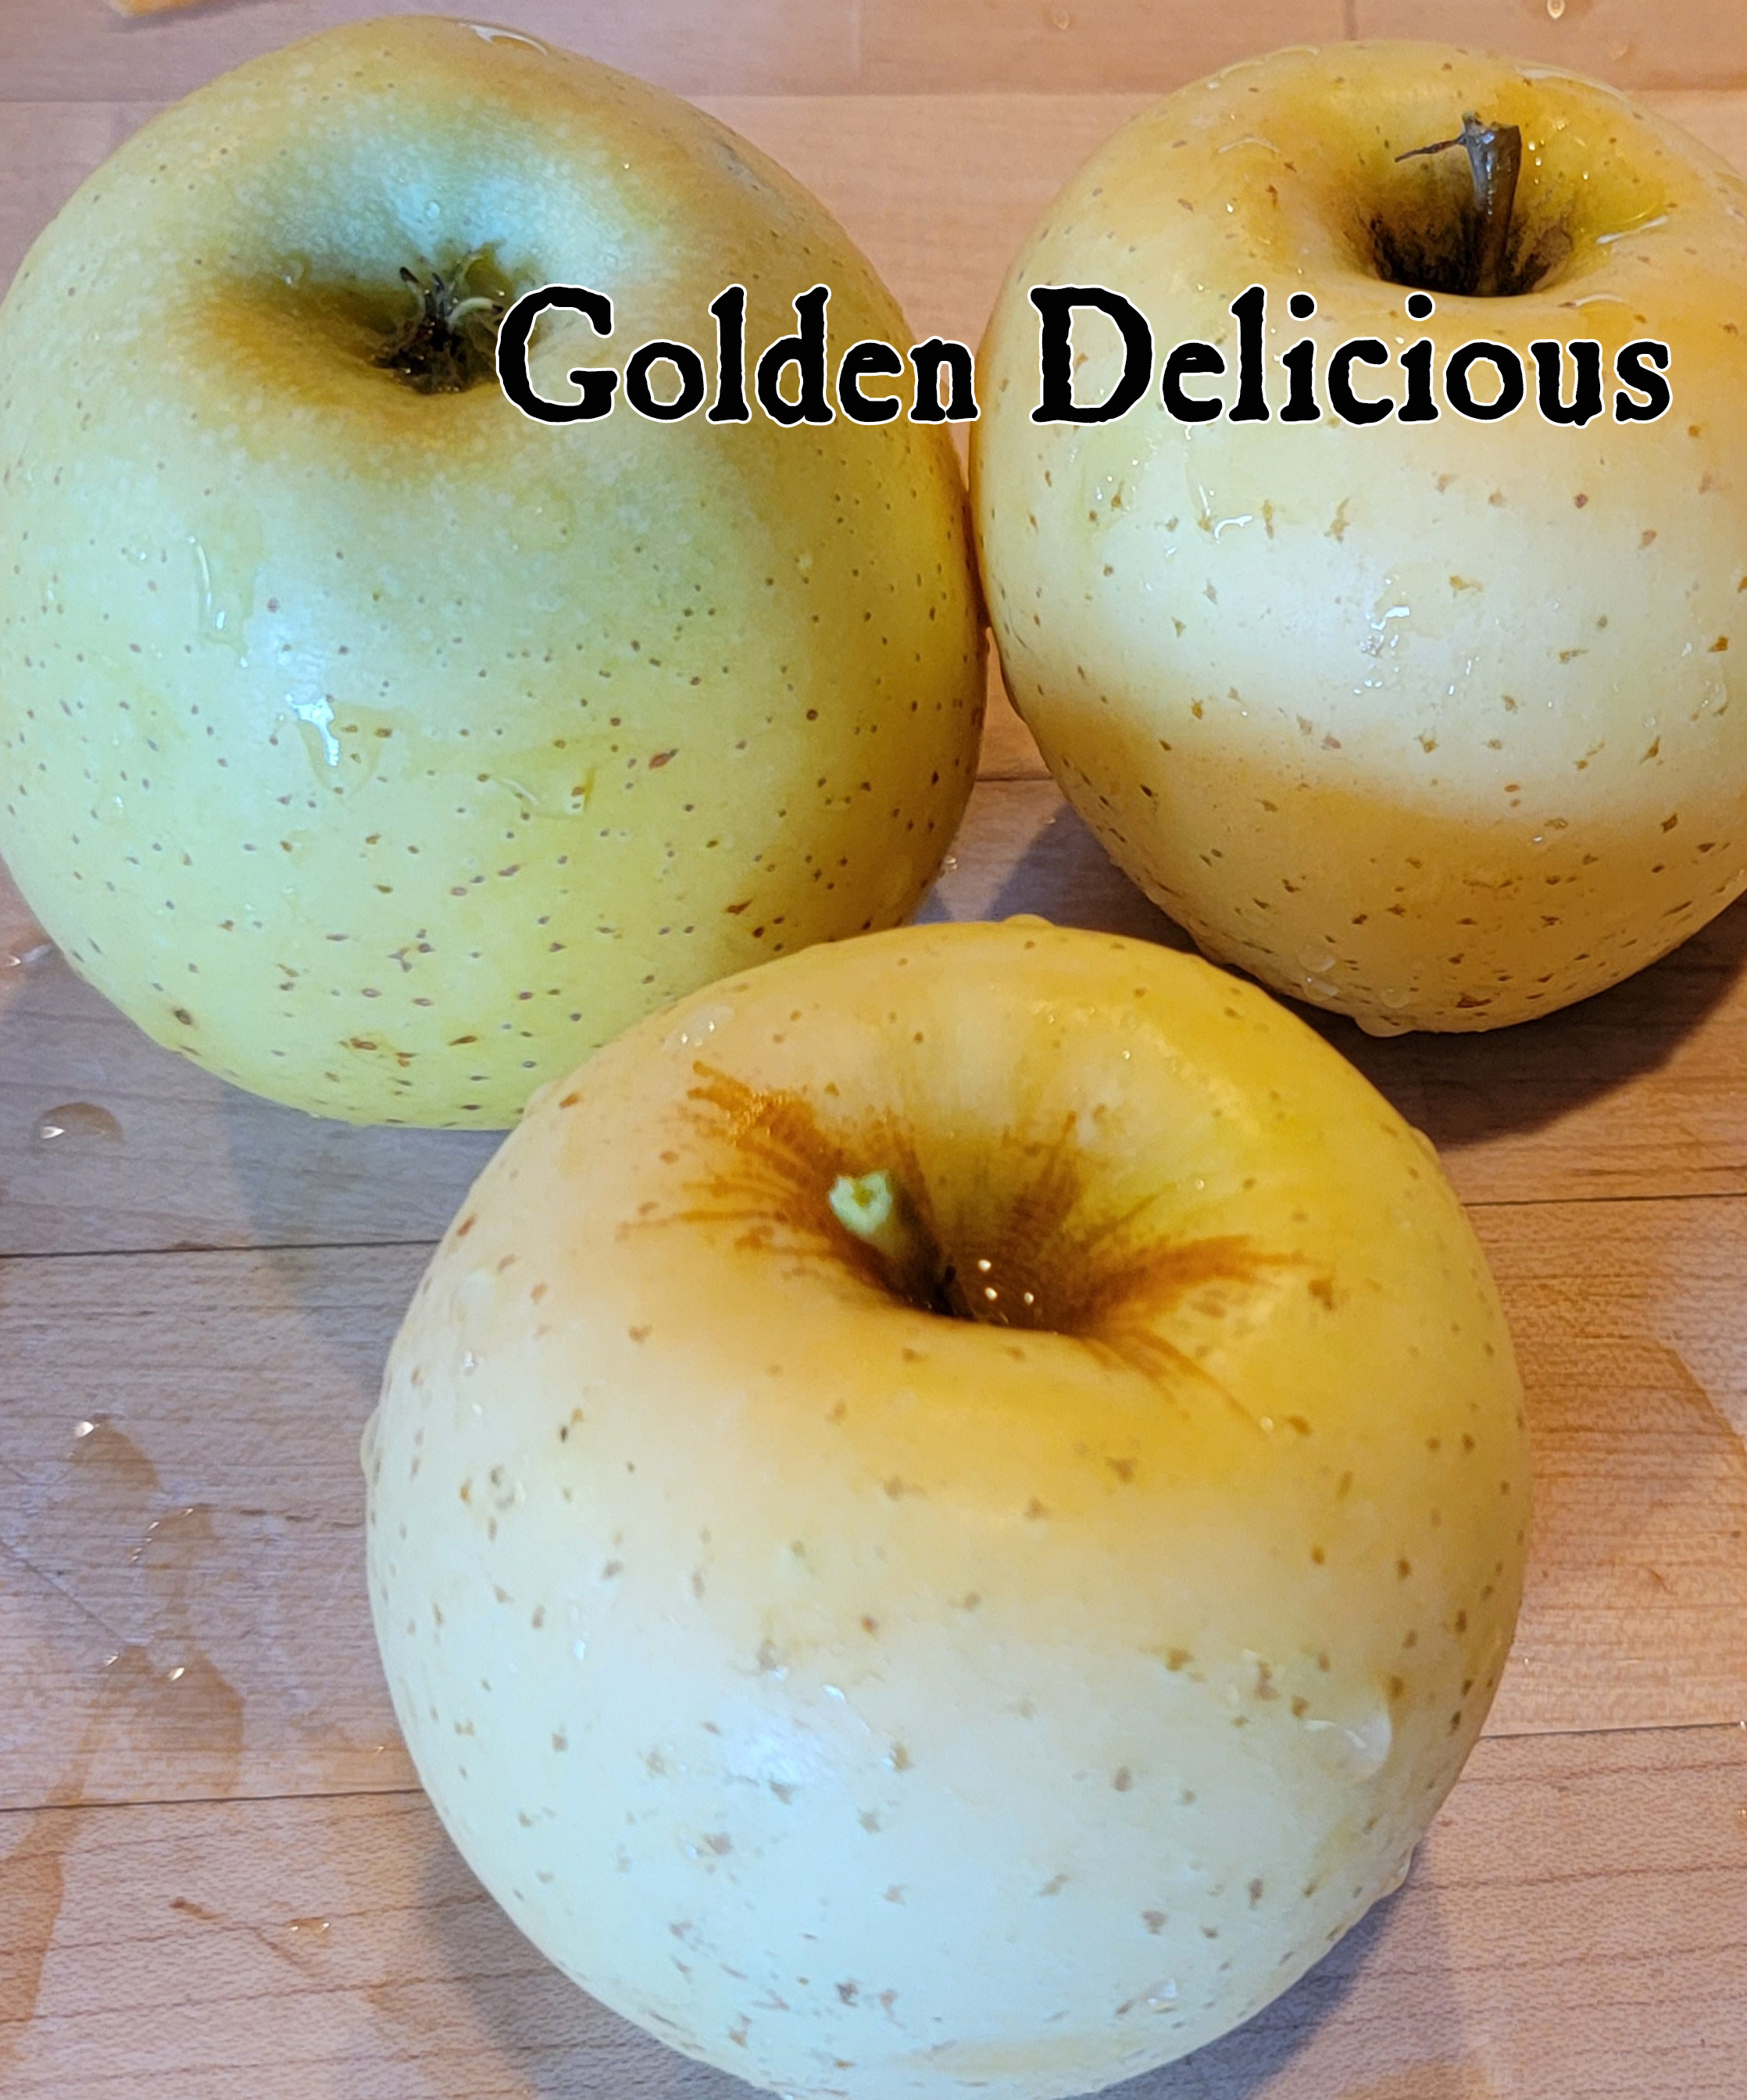 https://rileysfarm.com/wp-content/uploads/2022/10/ig_apples_golden_delicious_20221020.jpg